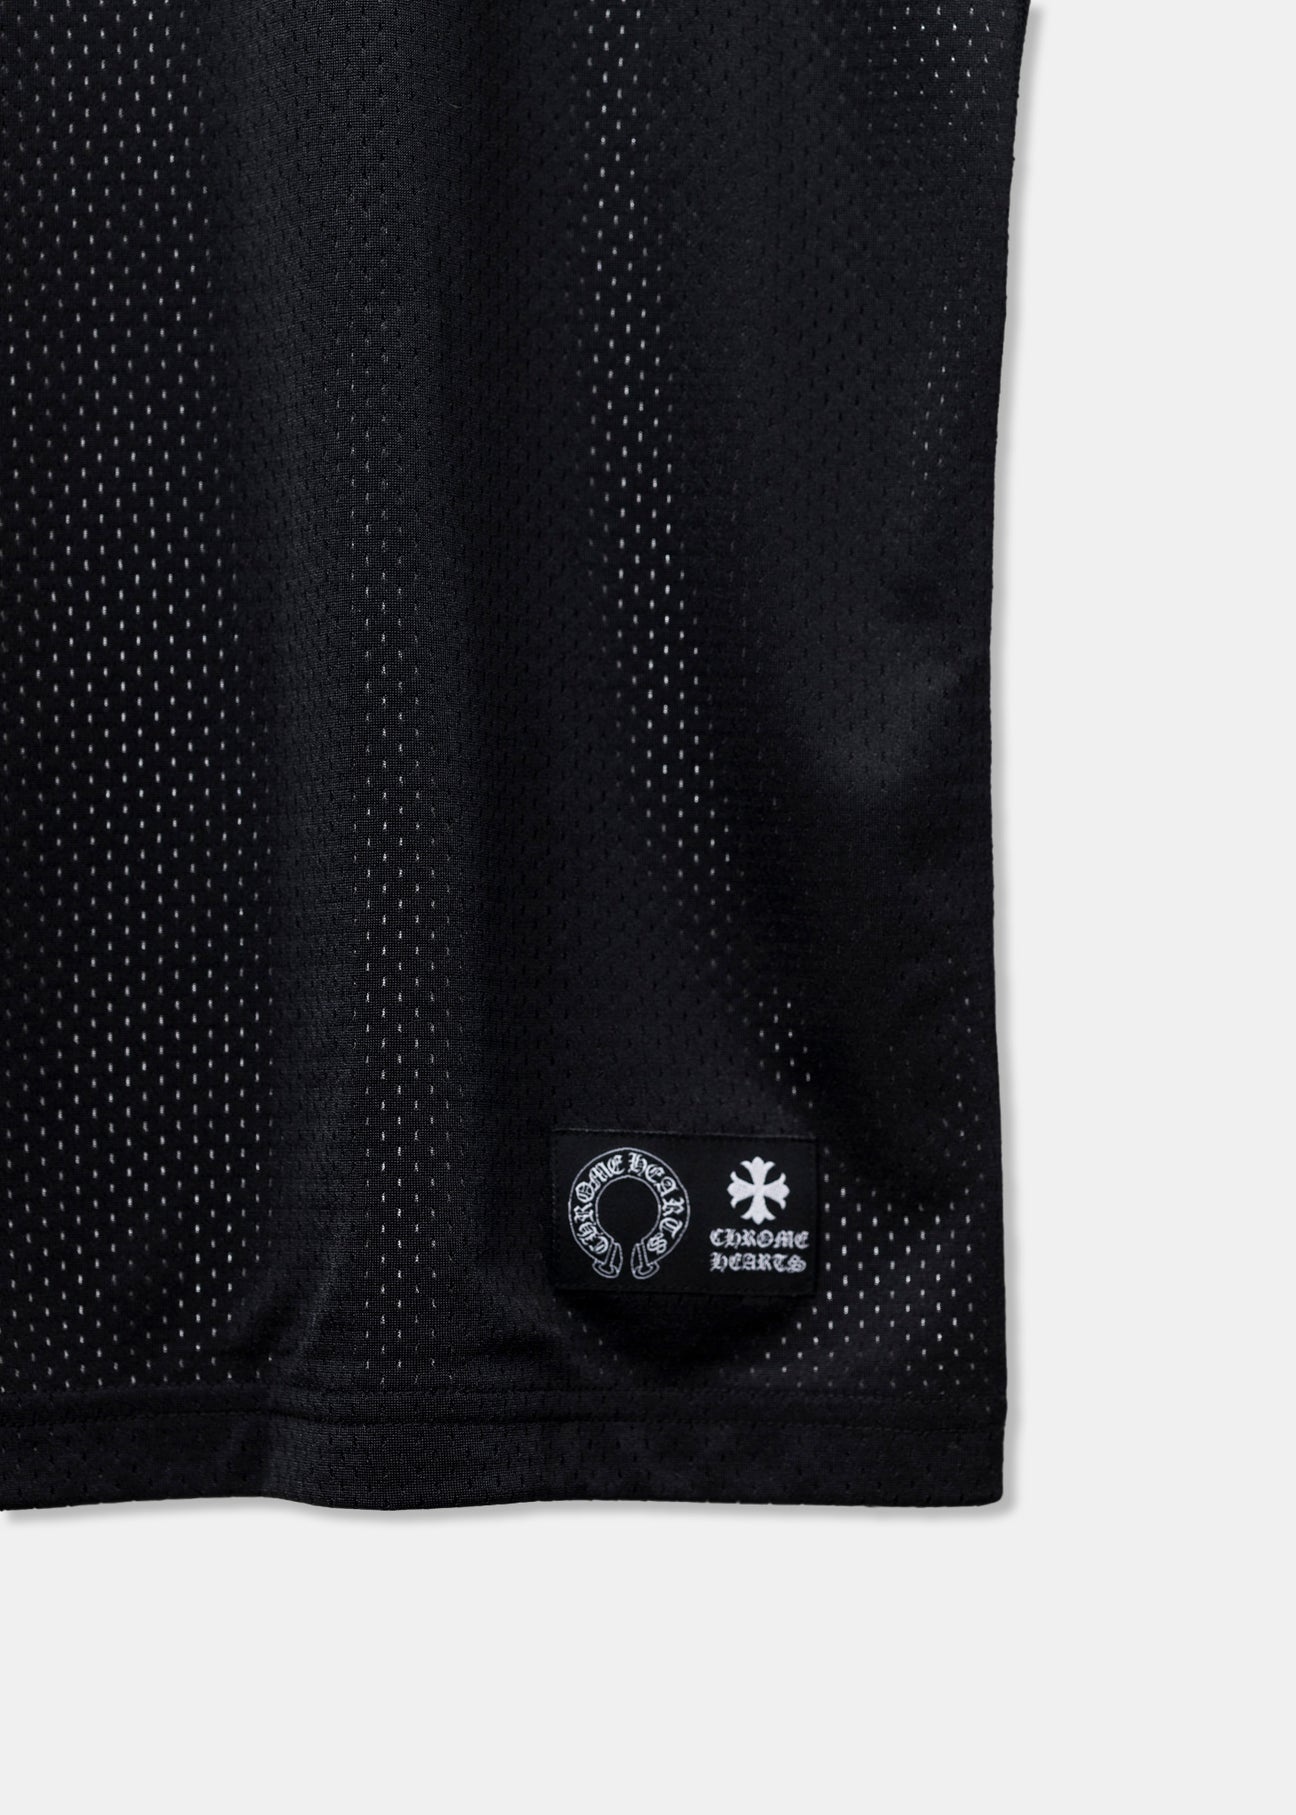 Black/Grey Reversible Basketball Jersey - 4